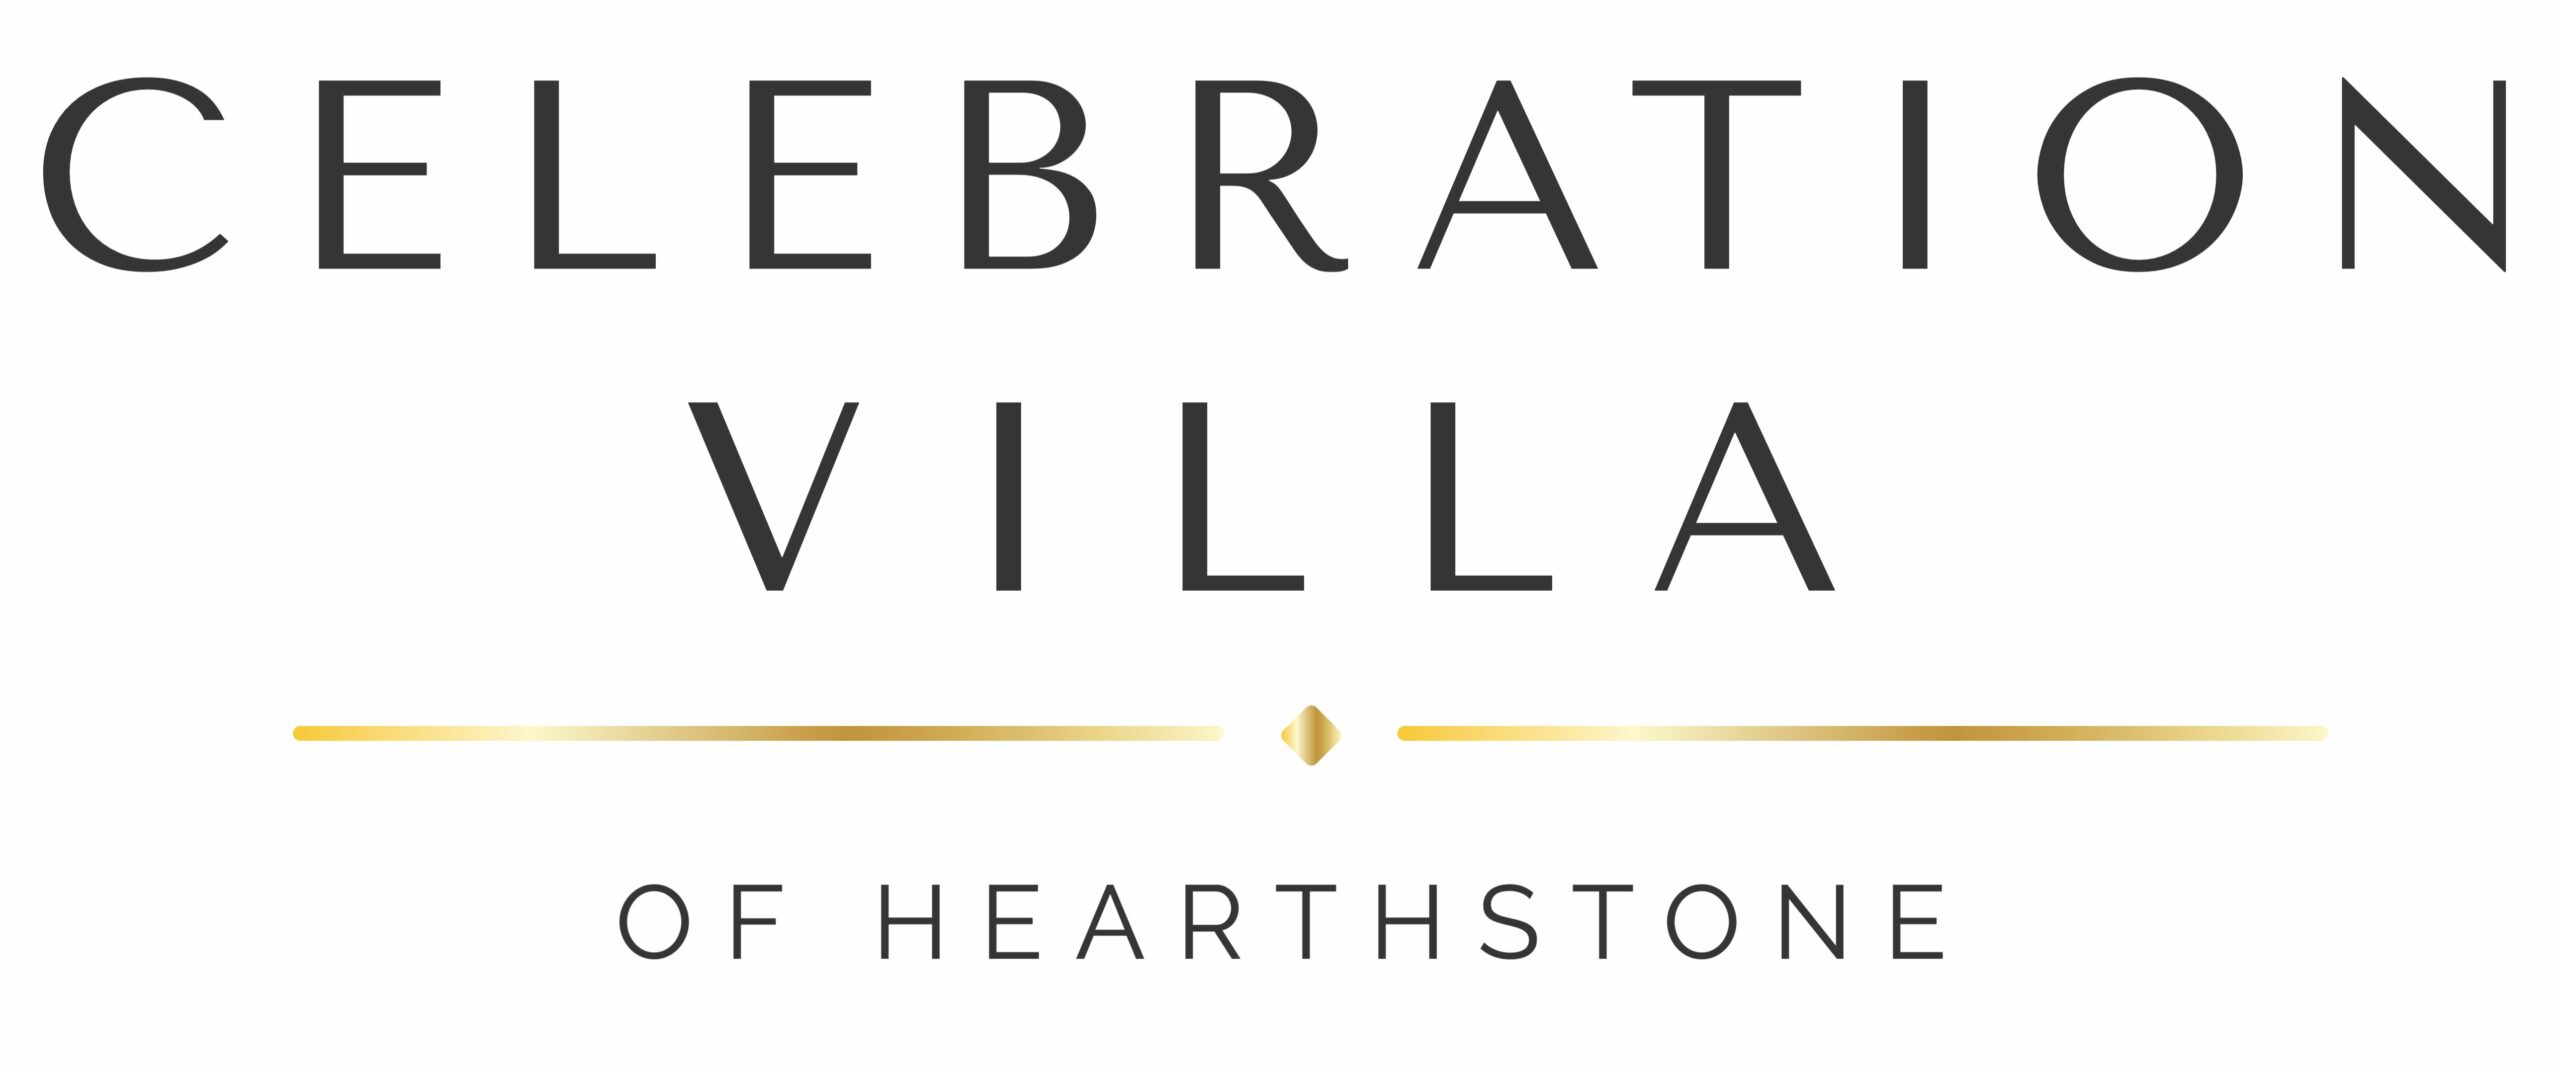 Celebration Villa of Hearthstone West